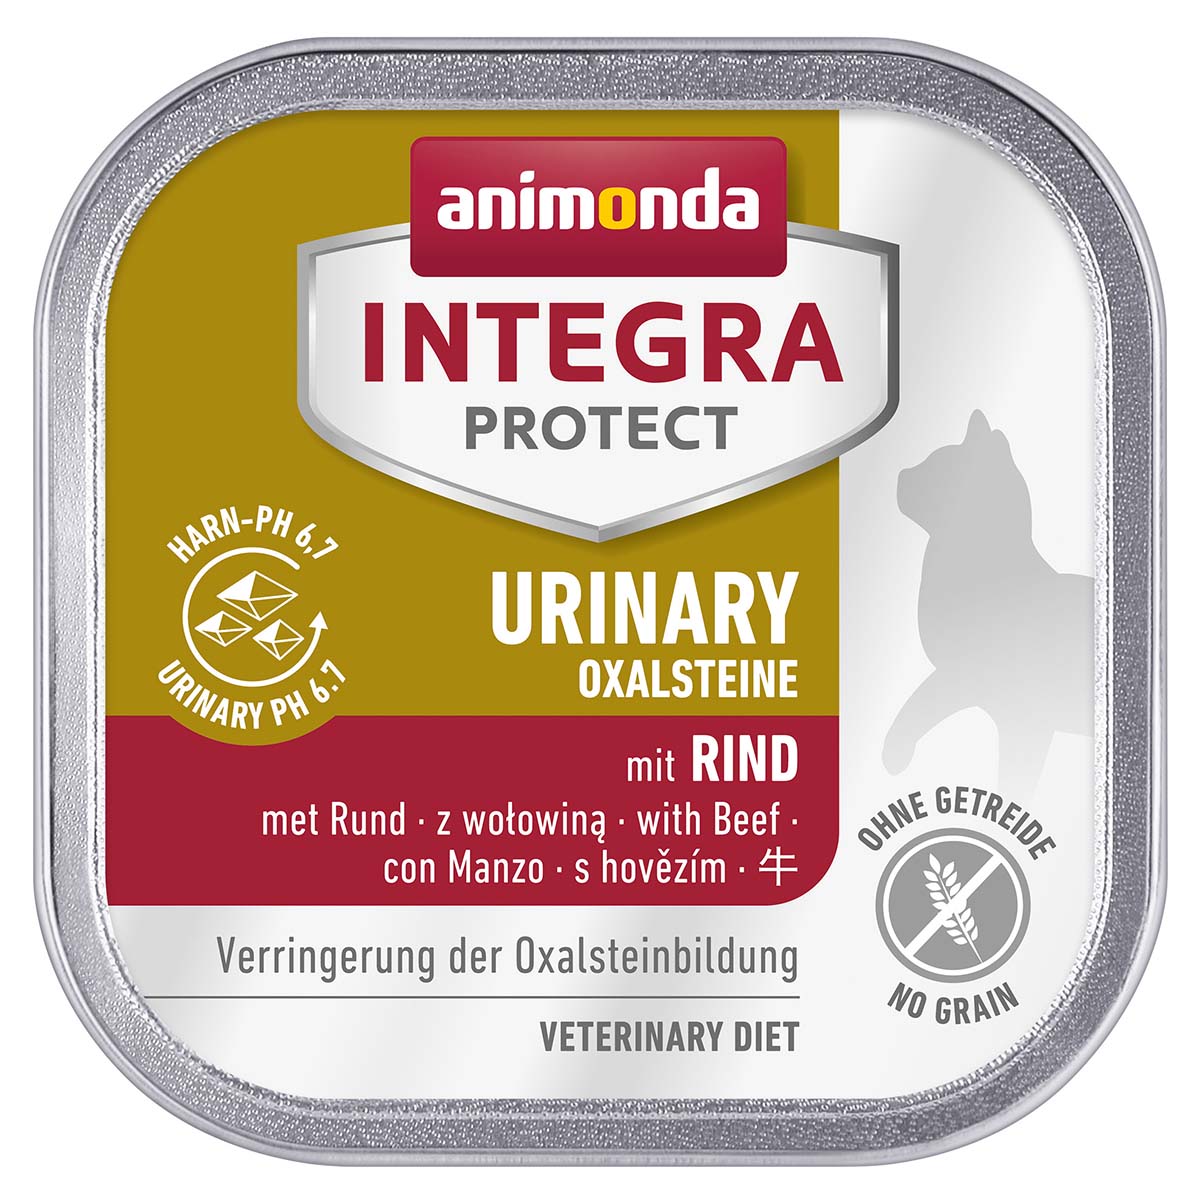 animonda INTEGRA PROTECT Adult Urinary Oxalstein mit Rind 32x100g von animonda Integra Protect